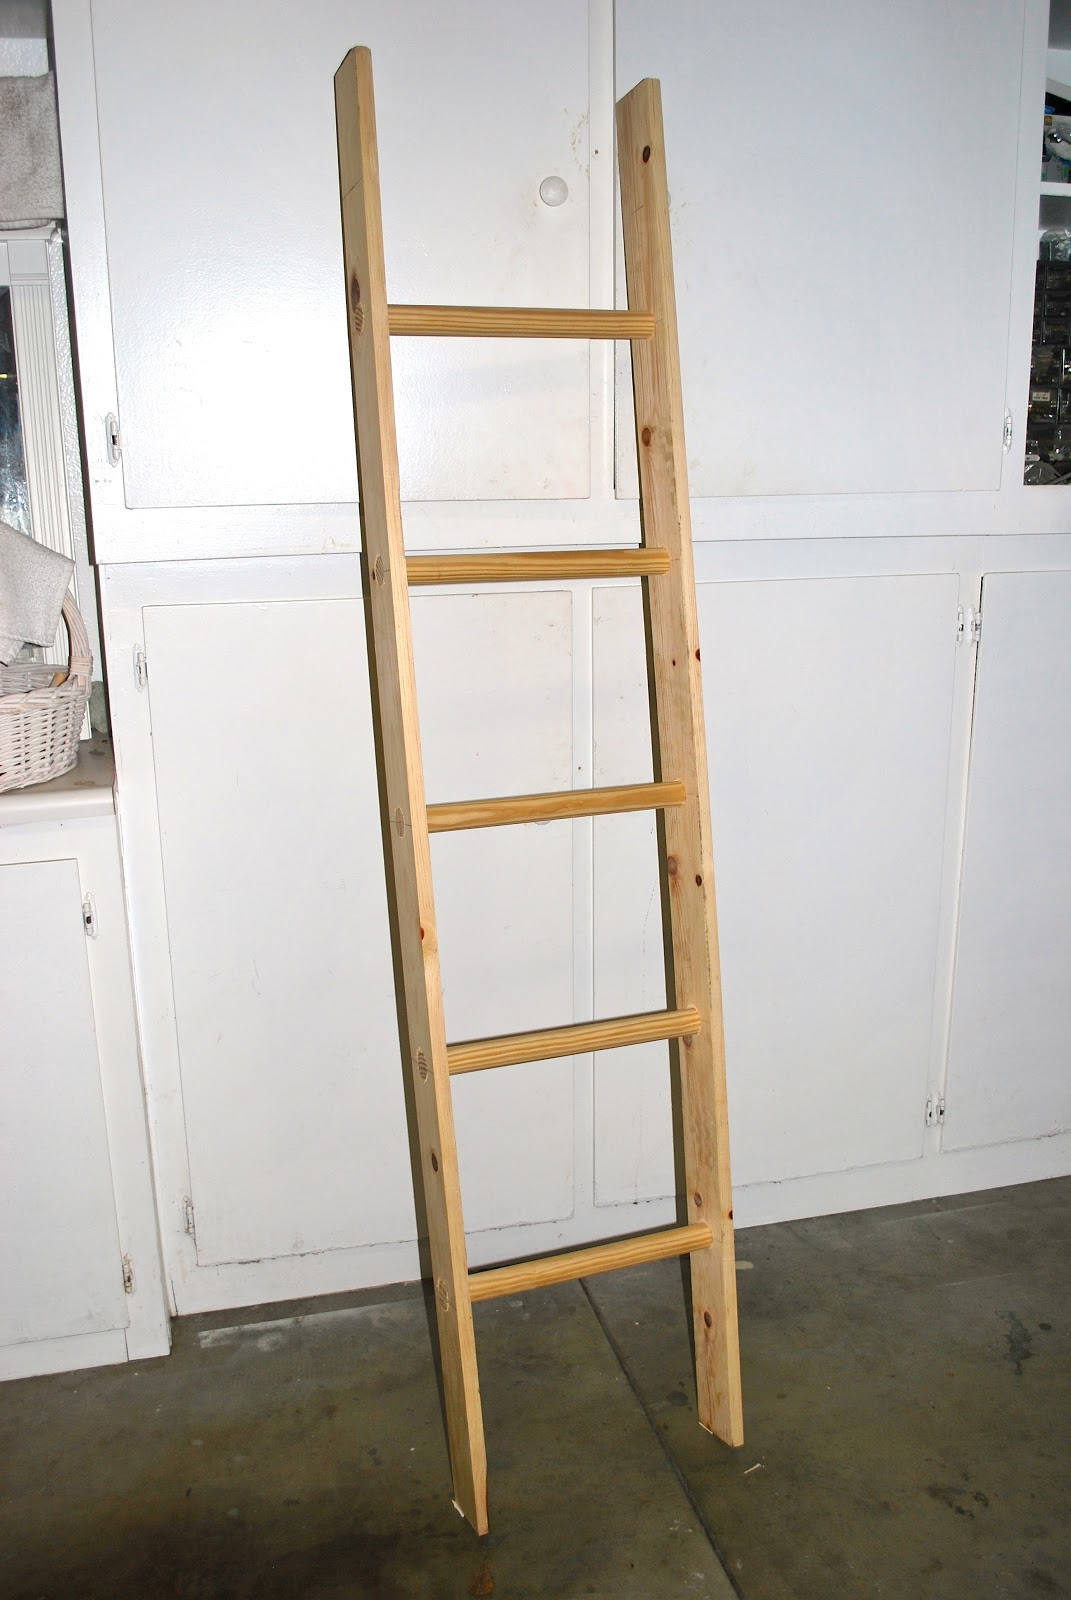 Best ideas about DIY Wood Ladder
. Save or Pin Saleena DIY Vintage Ladder Part 1 Now.